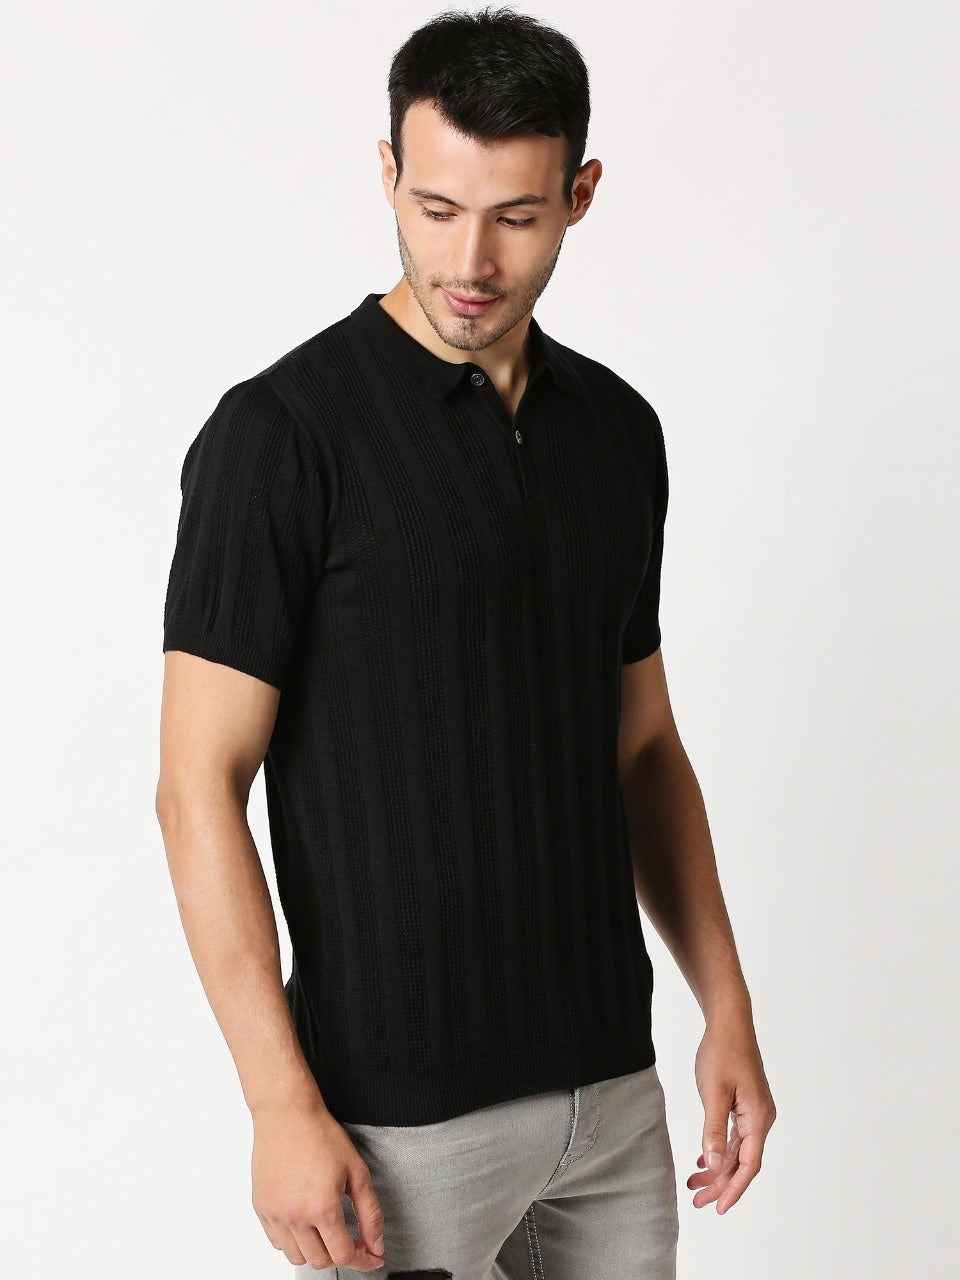 Fostino Alpha Knitted Black Polo T-shirt - Fostino - T-Shirts